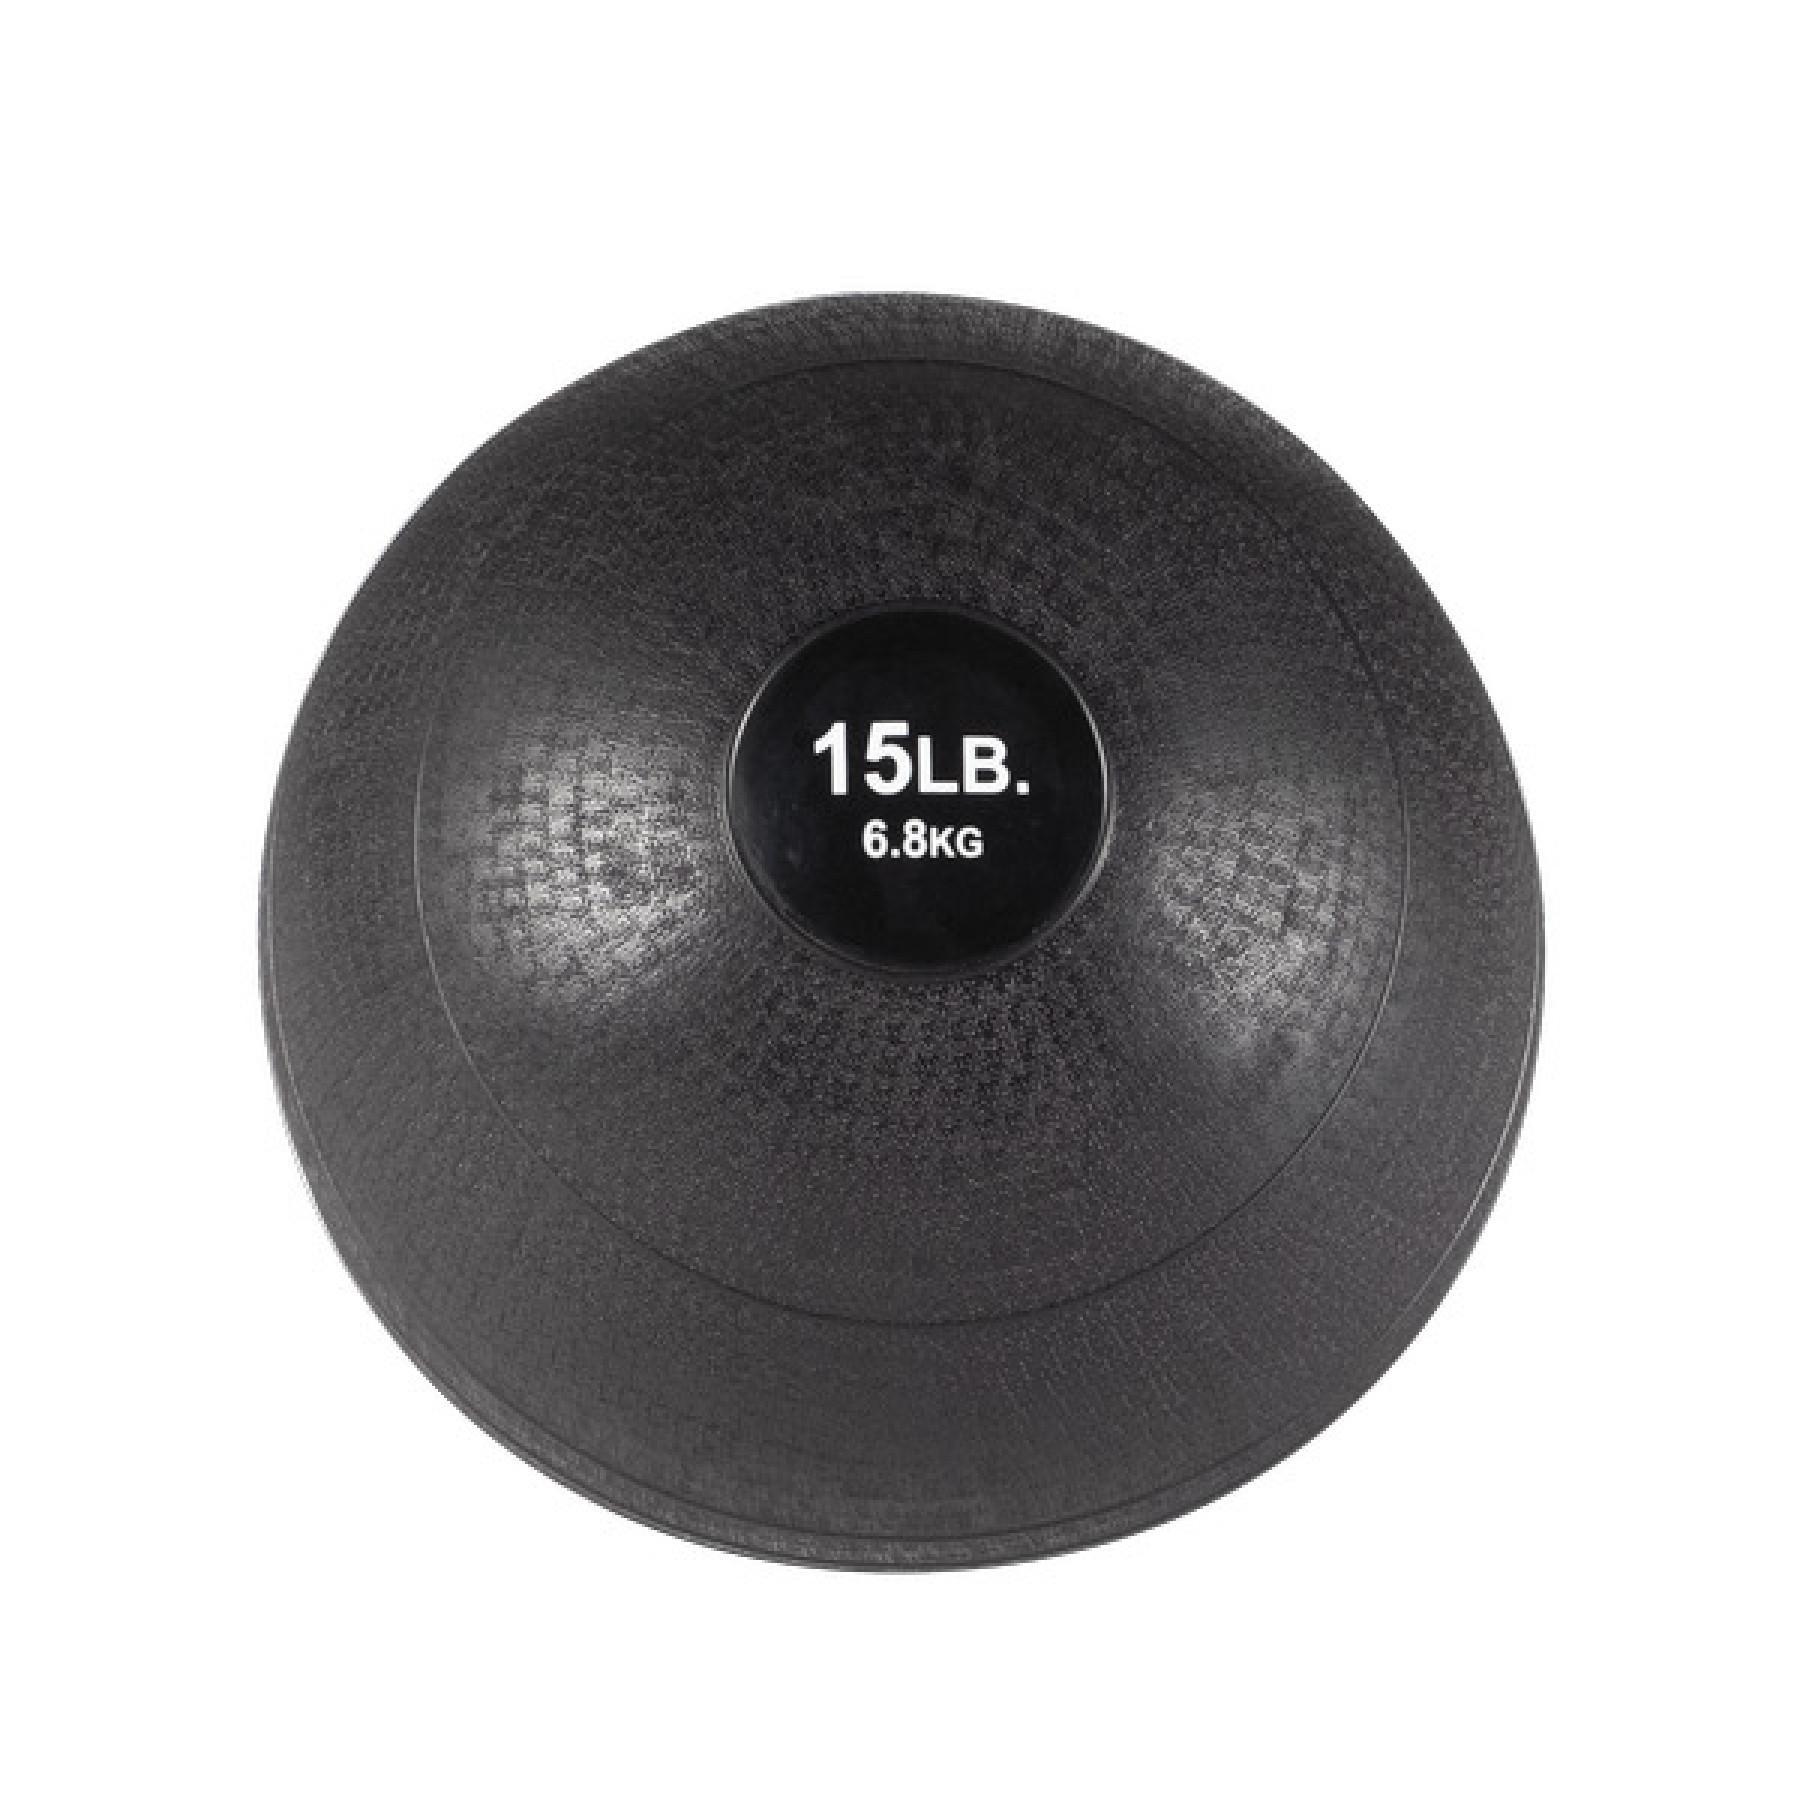 Slam ball 10 lbs - 4.6 kg Body Solid